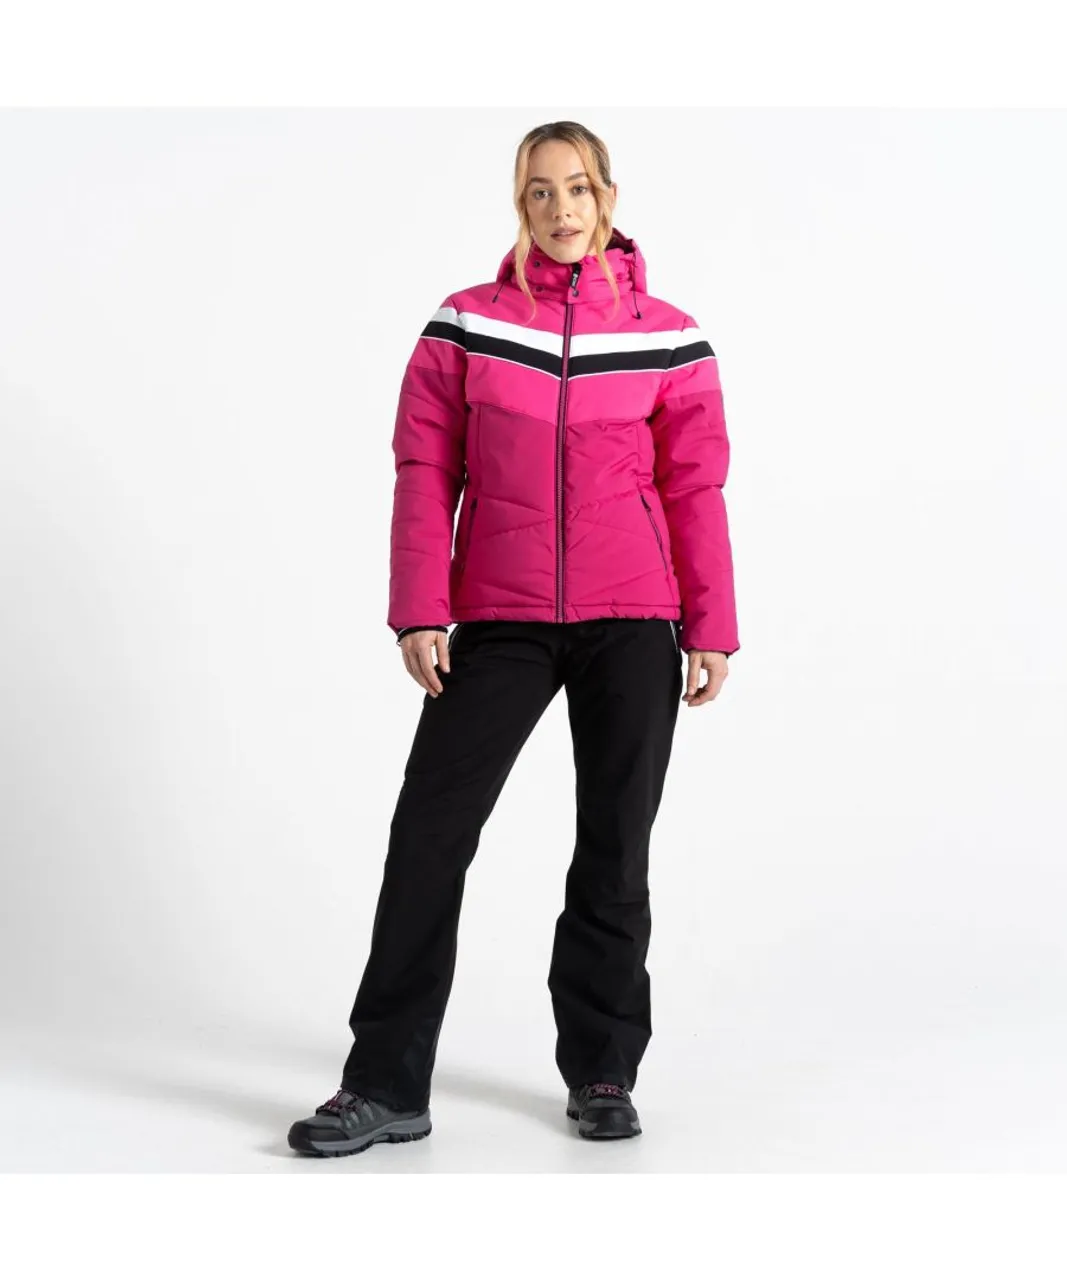 Dare 2B Womens Powder Jacket Pure PinkRed Ski - Pink